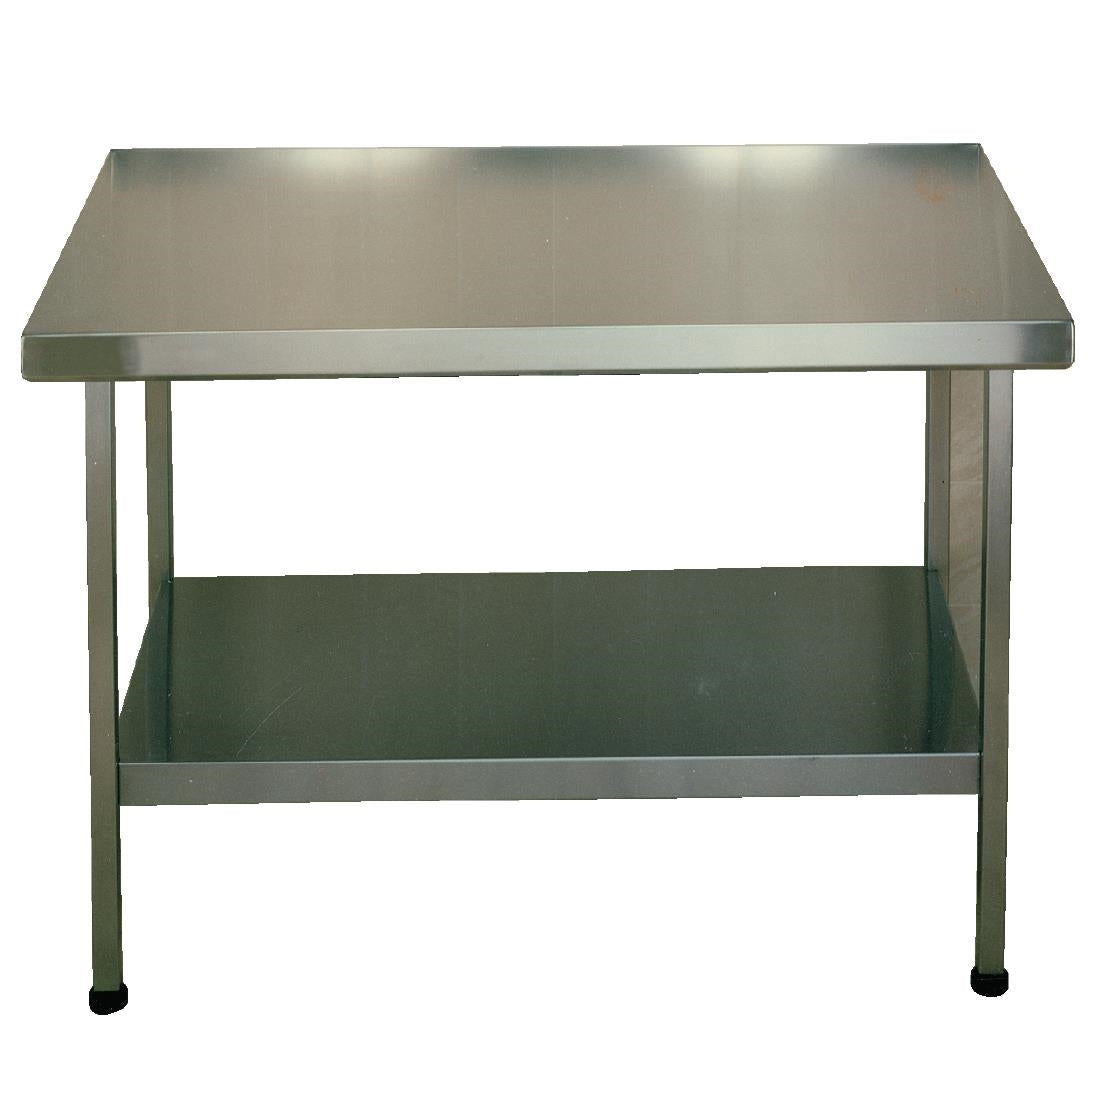 Franke Sissons Stainless Steel Centre Table 900x650mm JD Catering Equipment Solutions Ltd